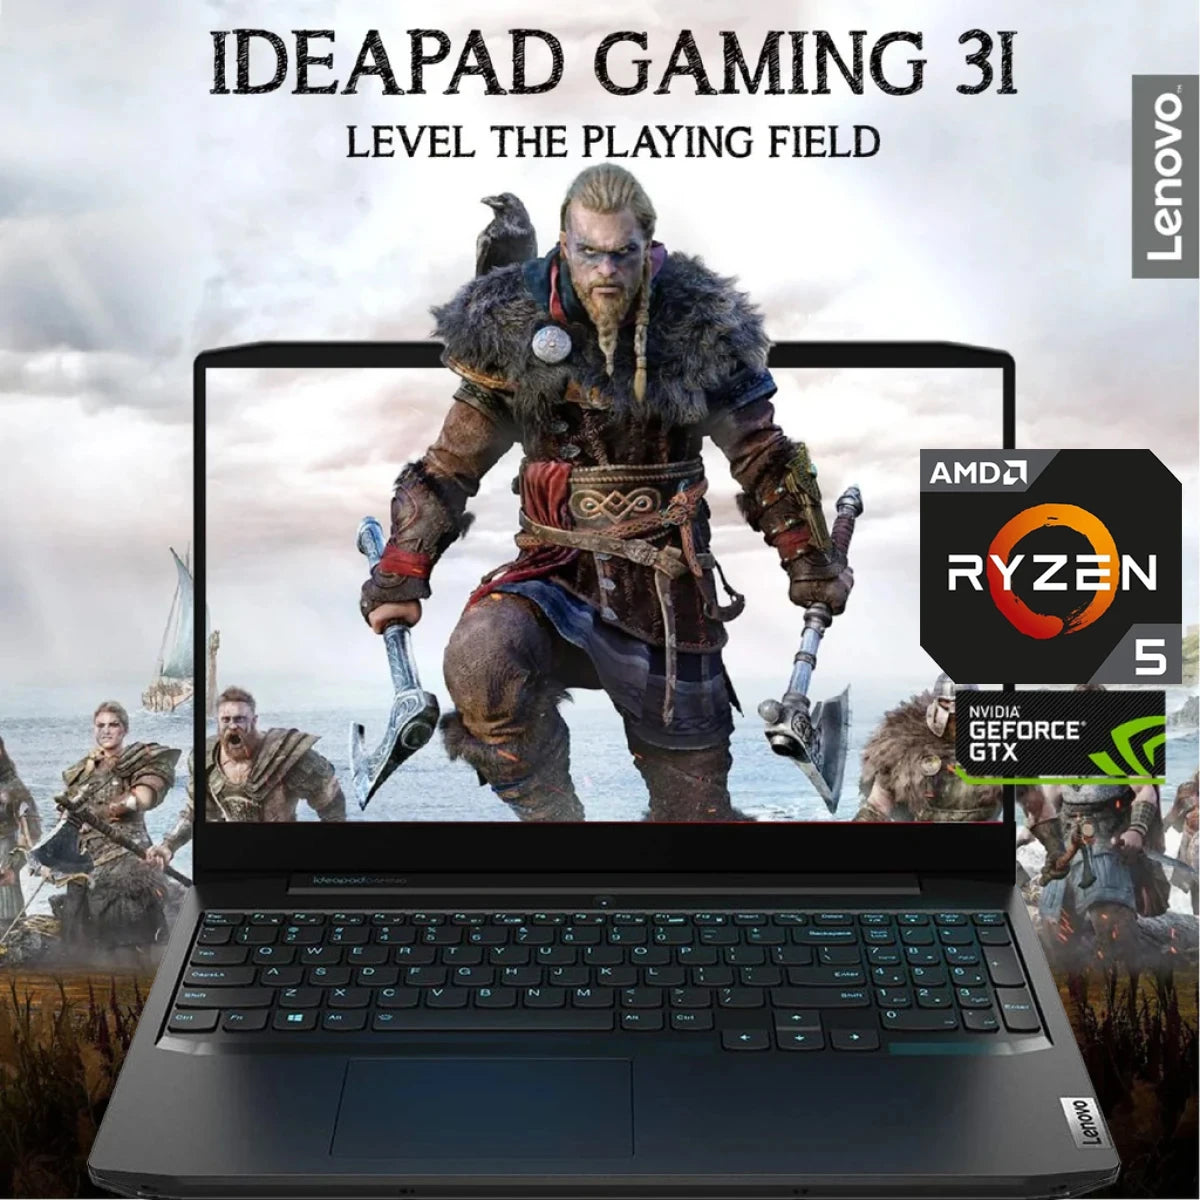 Lenovo IdeaPad Gaming 3 (2023) NEW 5Gen Ryzen 5 5600H 6-Cores w/ Nvidia GTX 1650 4GB DDR6 & 120Hz IPS Display - Shadow Black